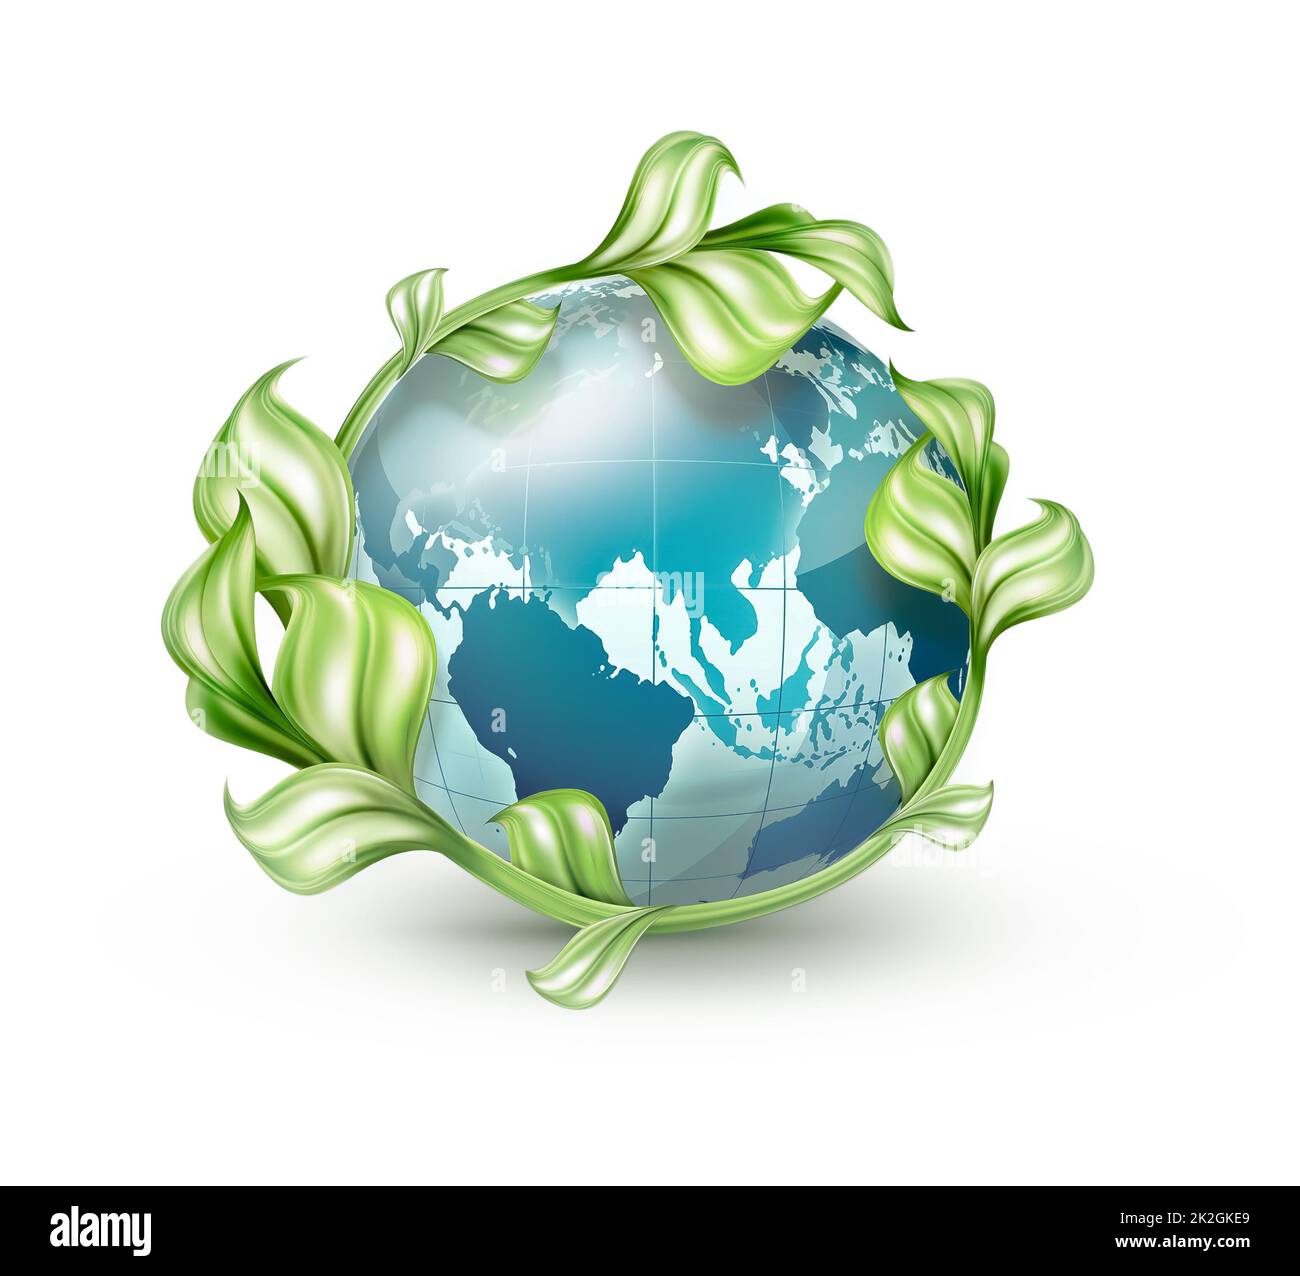 Design Of Environmental Protection Stock Photo